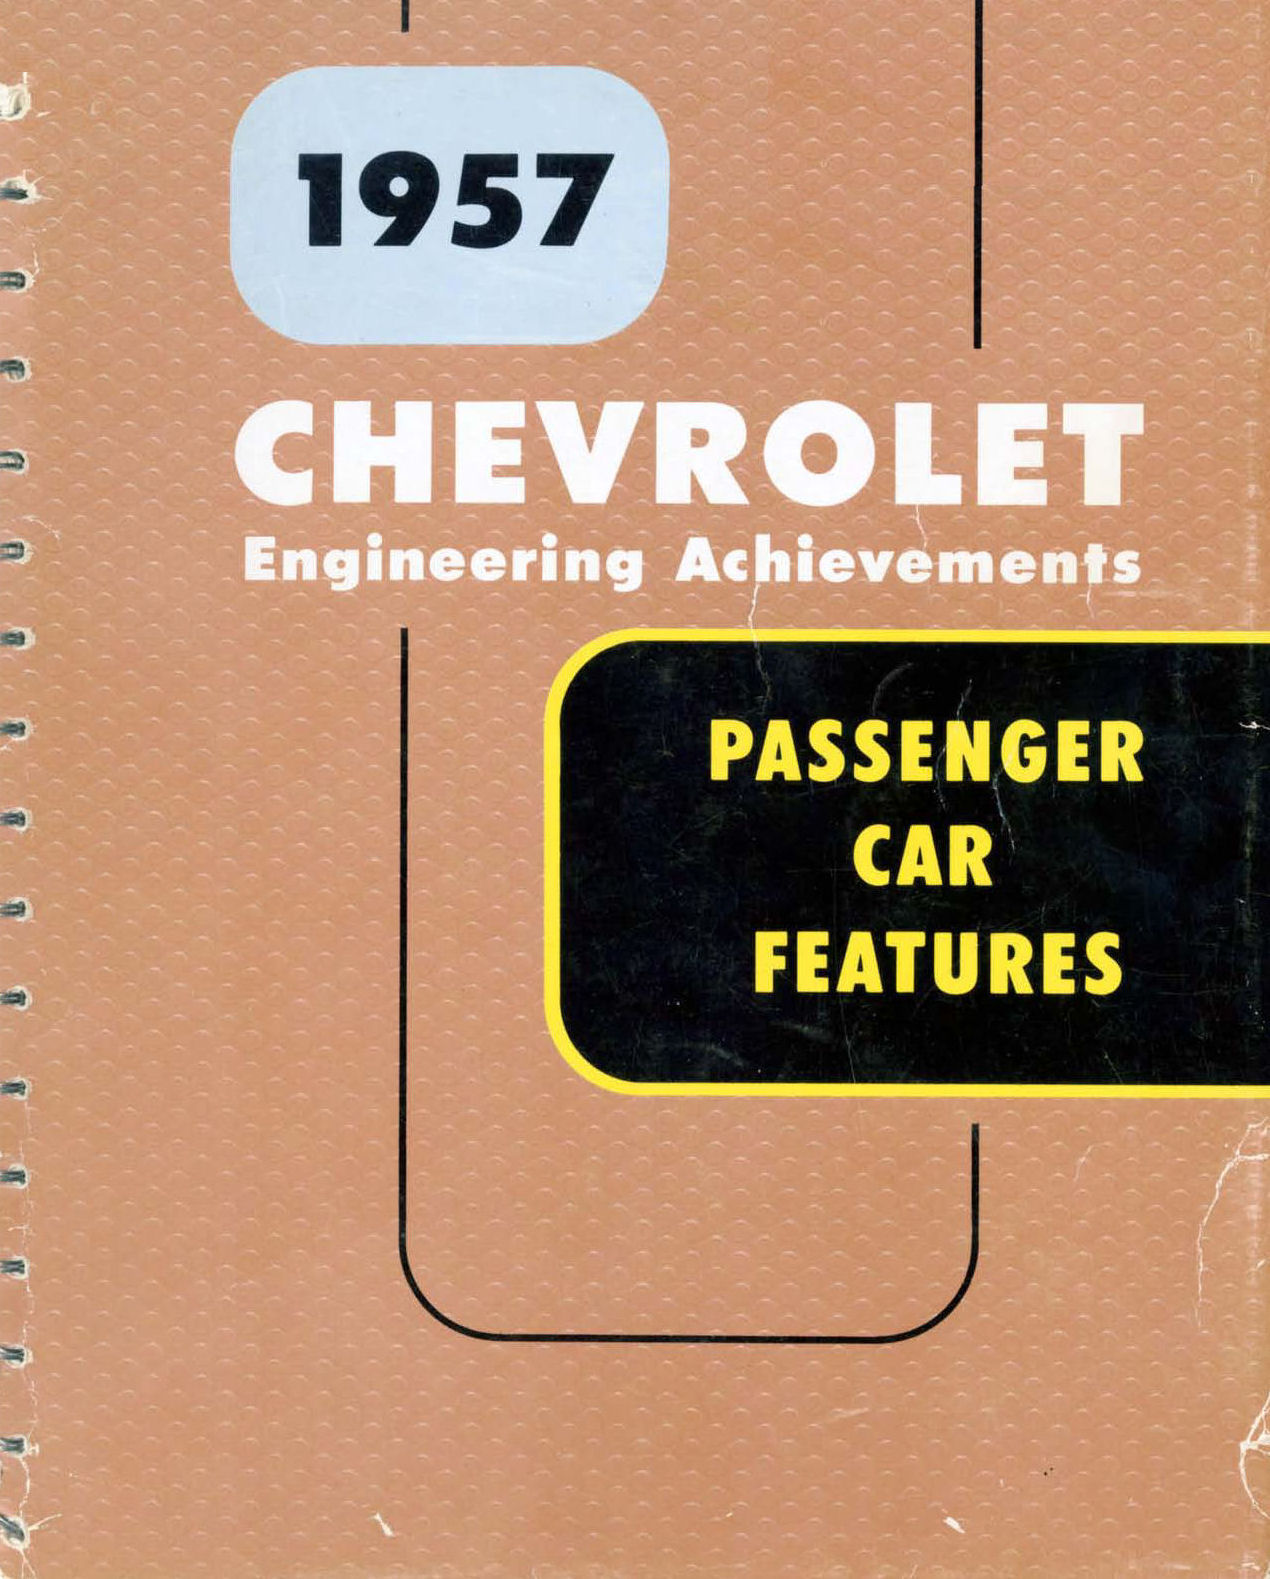 1957_Chevrolet_Engineering_Features-001